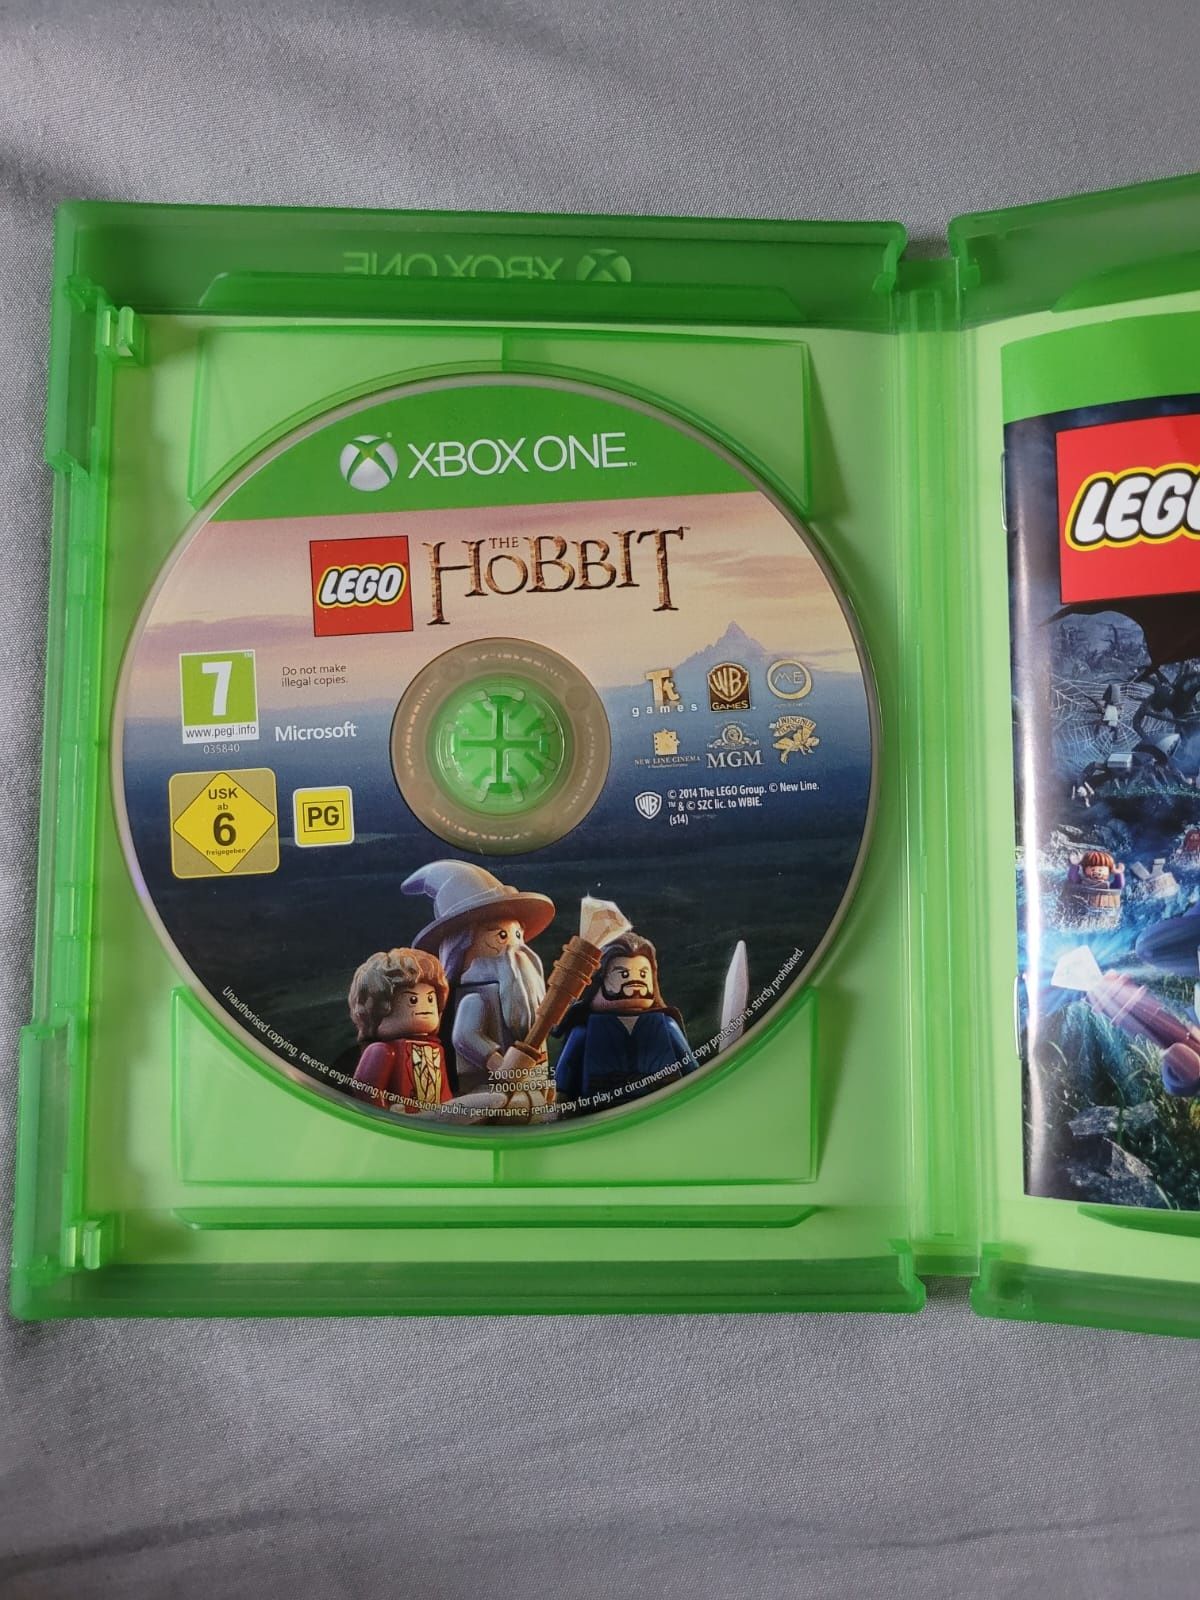 Gra na Xbox One "Hobbit" LEGO